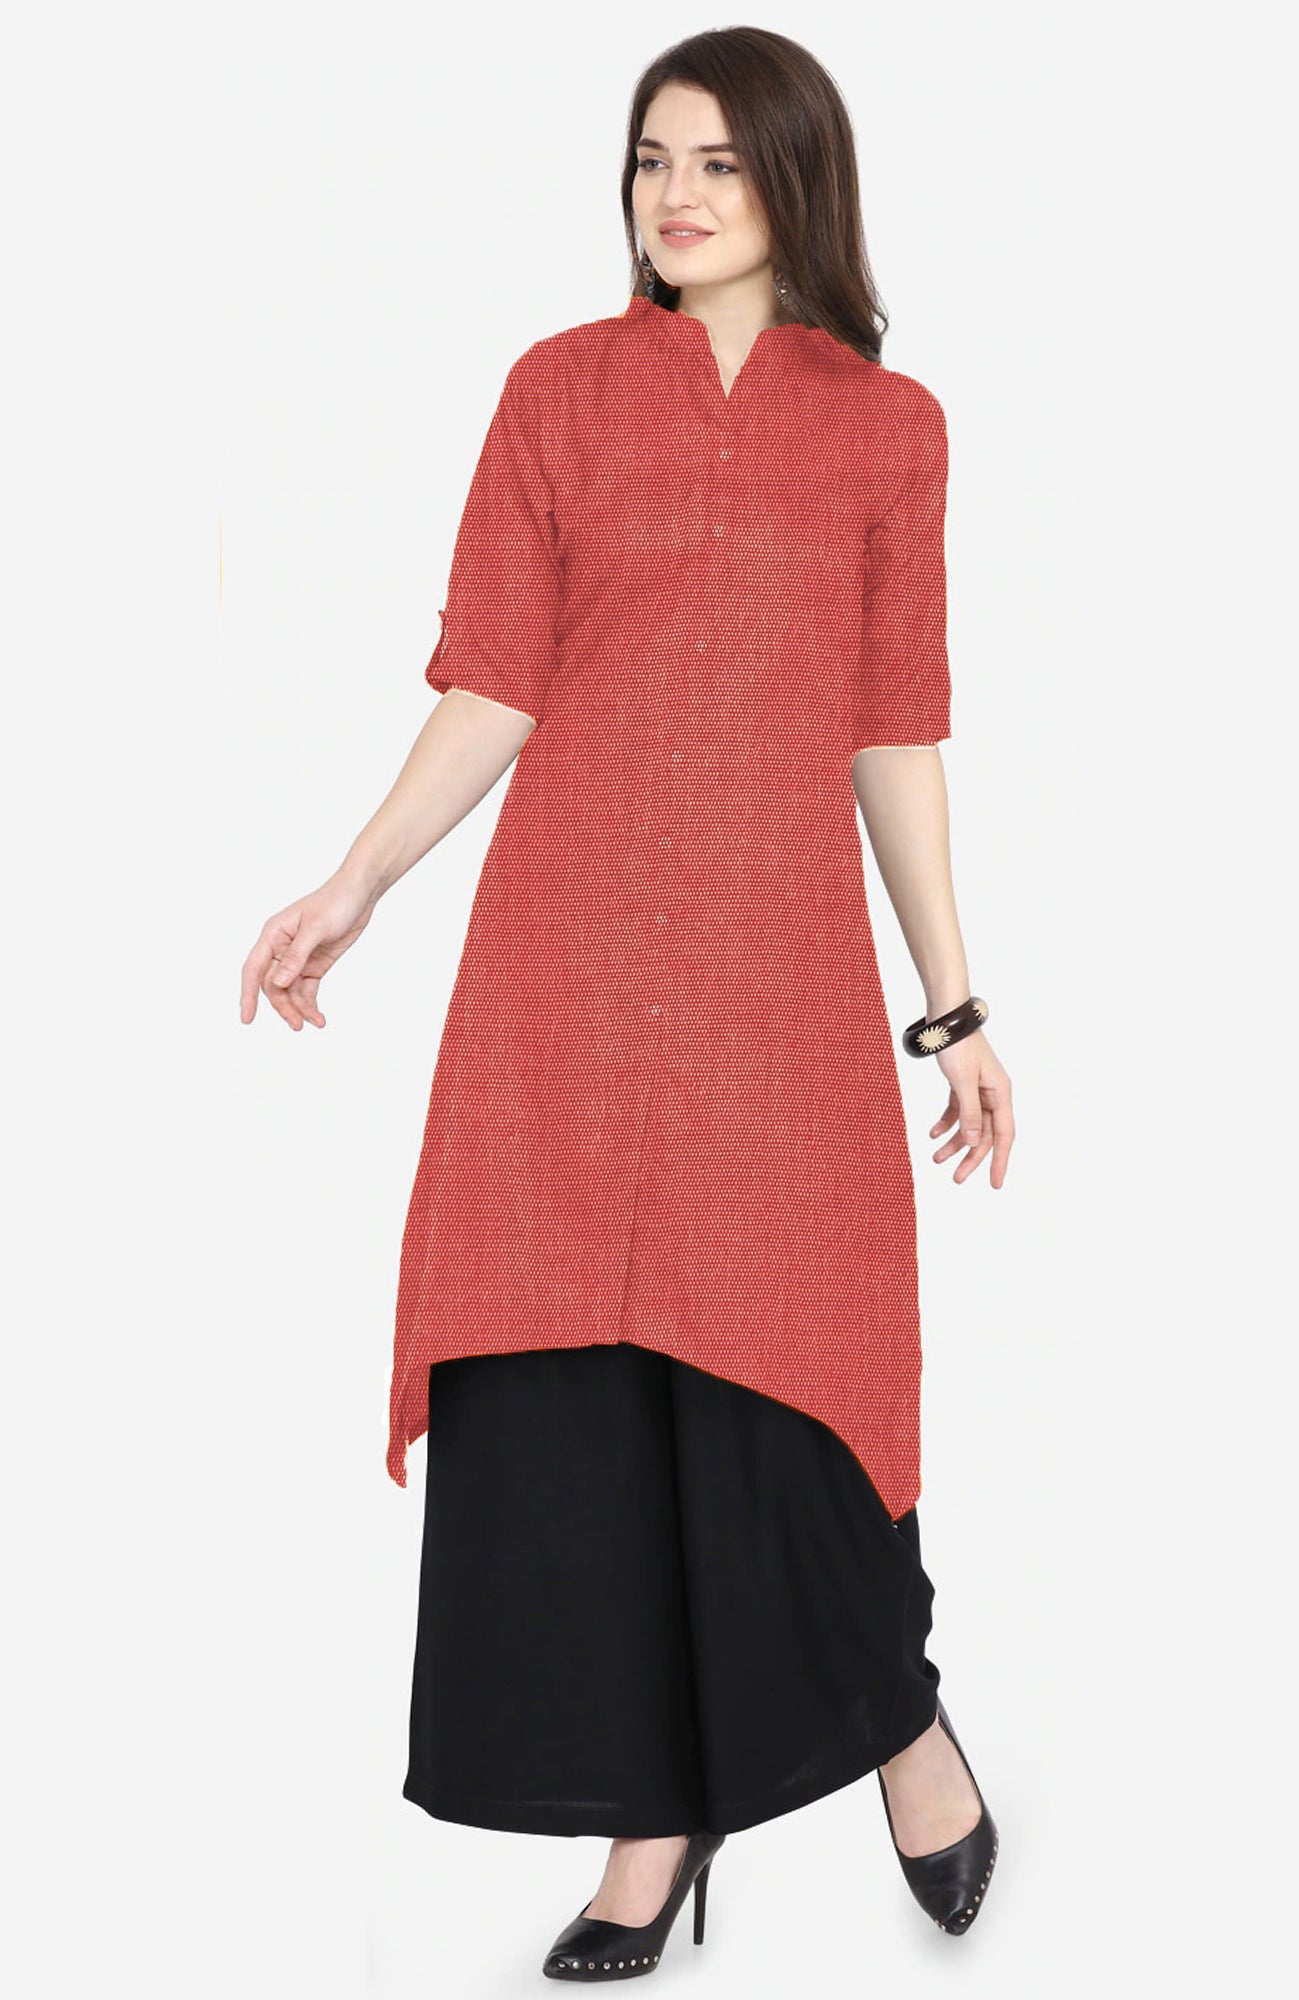 Plain Silk Kurti Design Ideas/ Silk kurti Design Images/ Plain Kurti  Pattern - YouTube | Silk kurti designs, Plain kurti designs, Silk dress  design